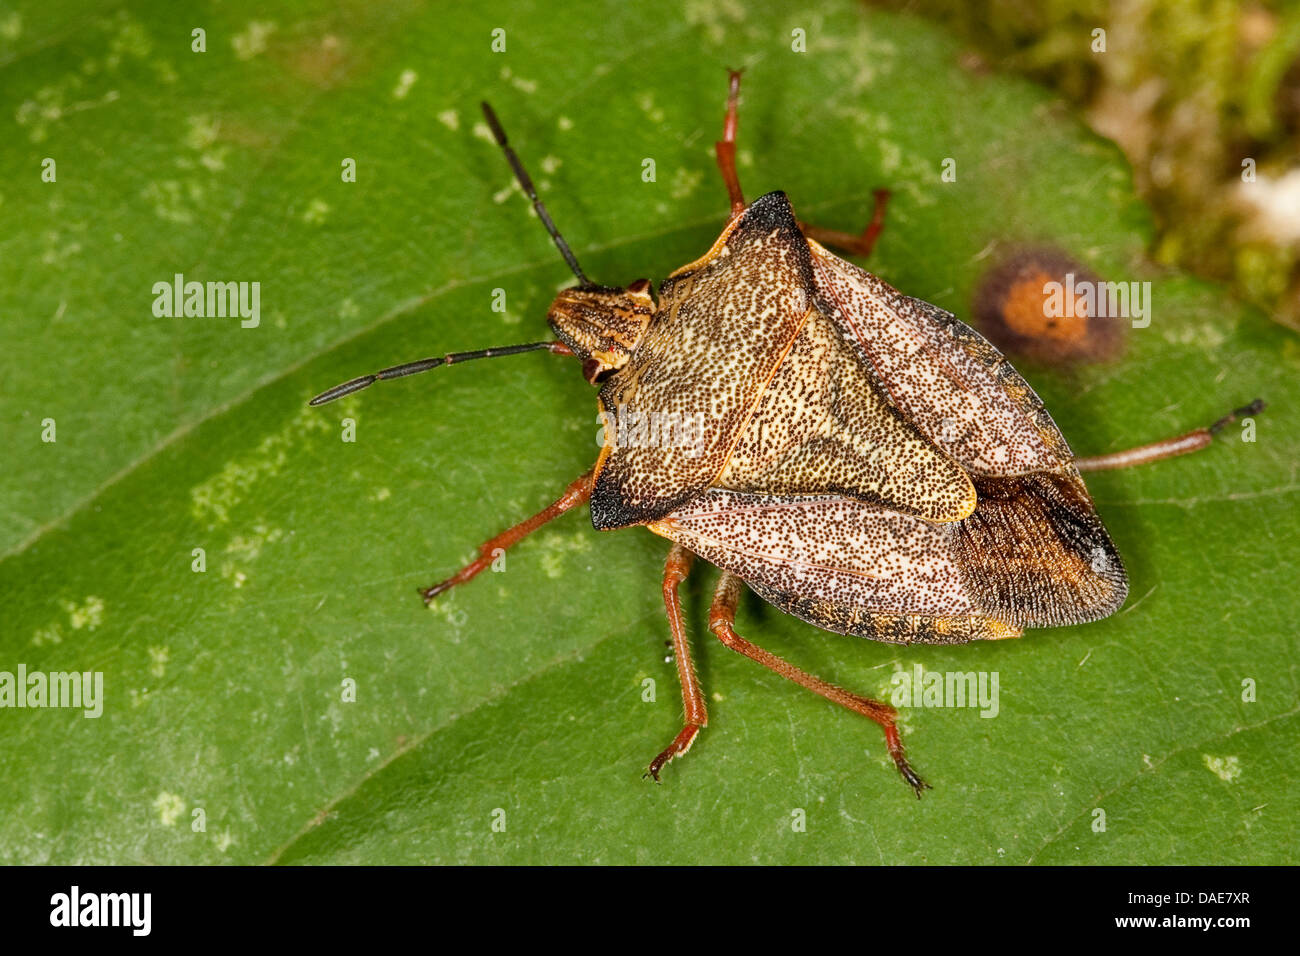 Mediterranean stink bug, Red shield bug, Skull shield-bug (Carpocoris fuscispinus, Carpocoris mediterraneus atlanticus), sitting on a leaf Stock Photo